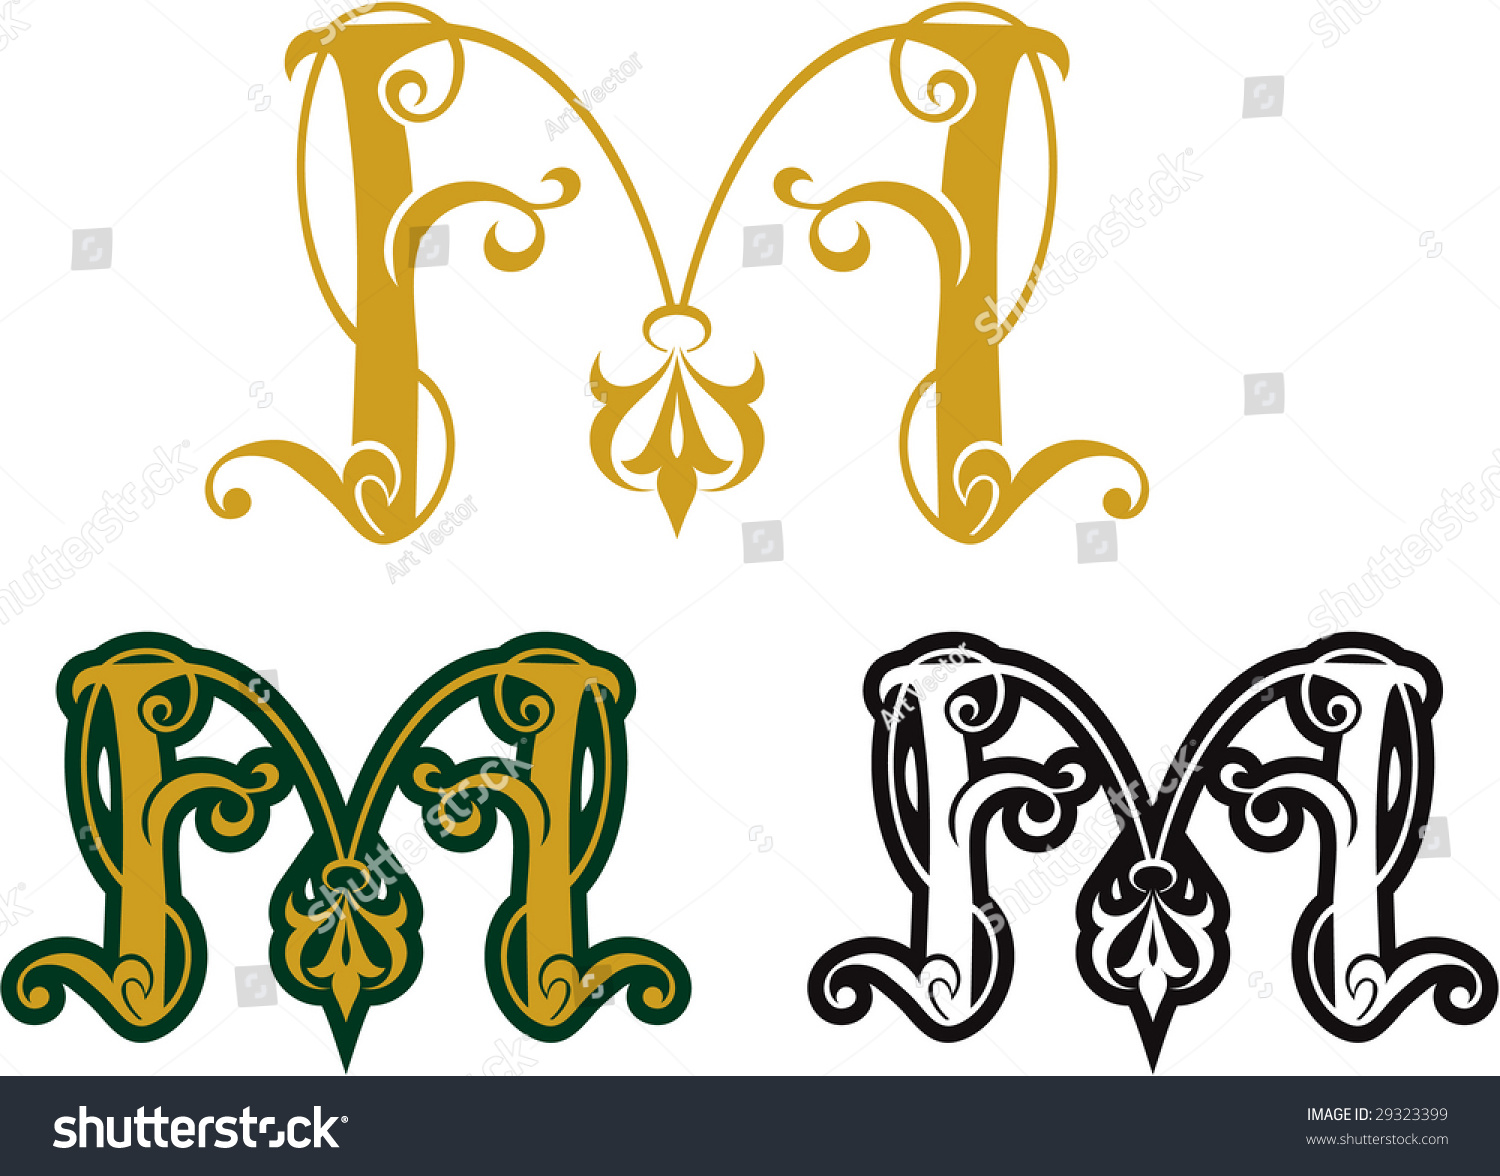 Set Of Vector Letters M For Design - 29323399 : Shutterstock